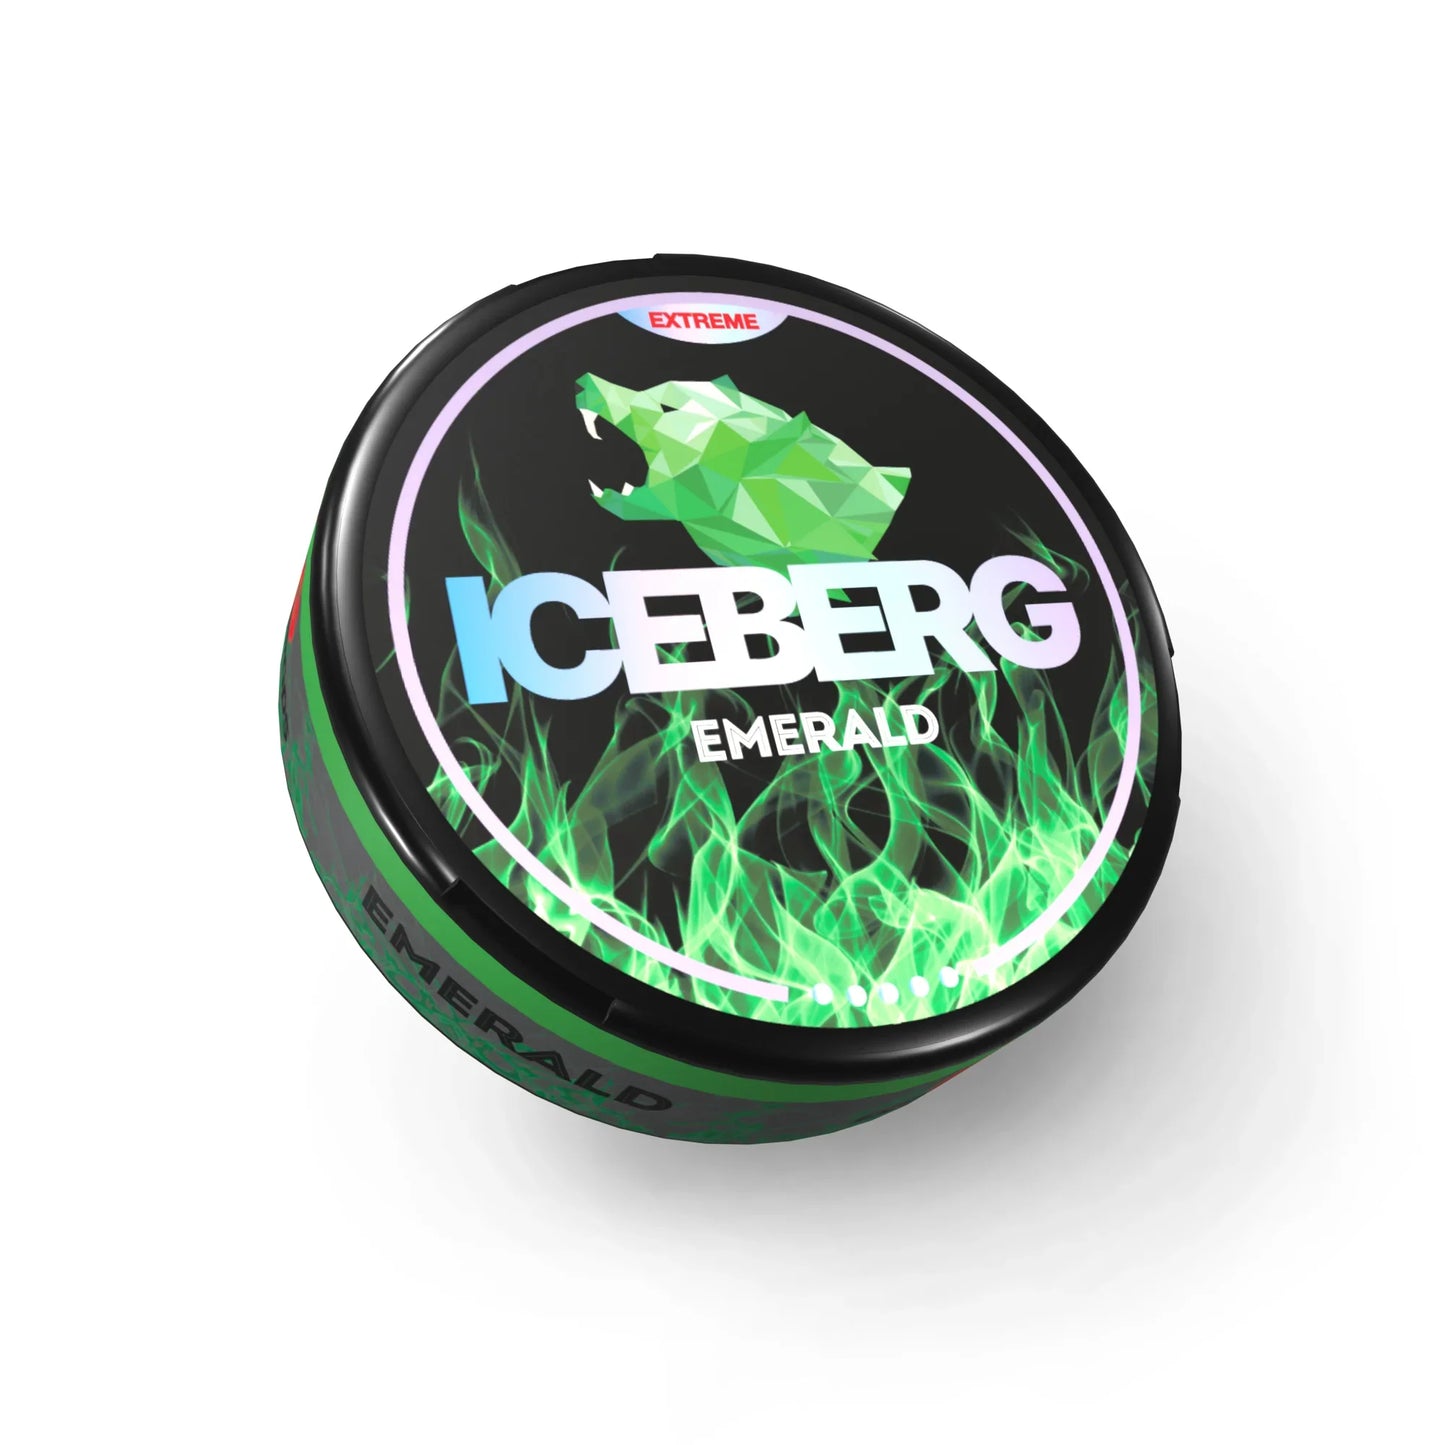 Iceberg Ultra Emerald Nicotine Pouches, Snus 150mg/g